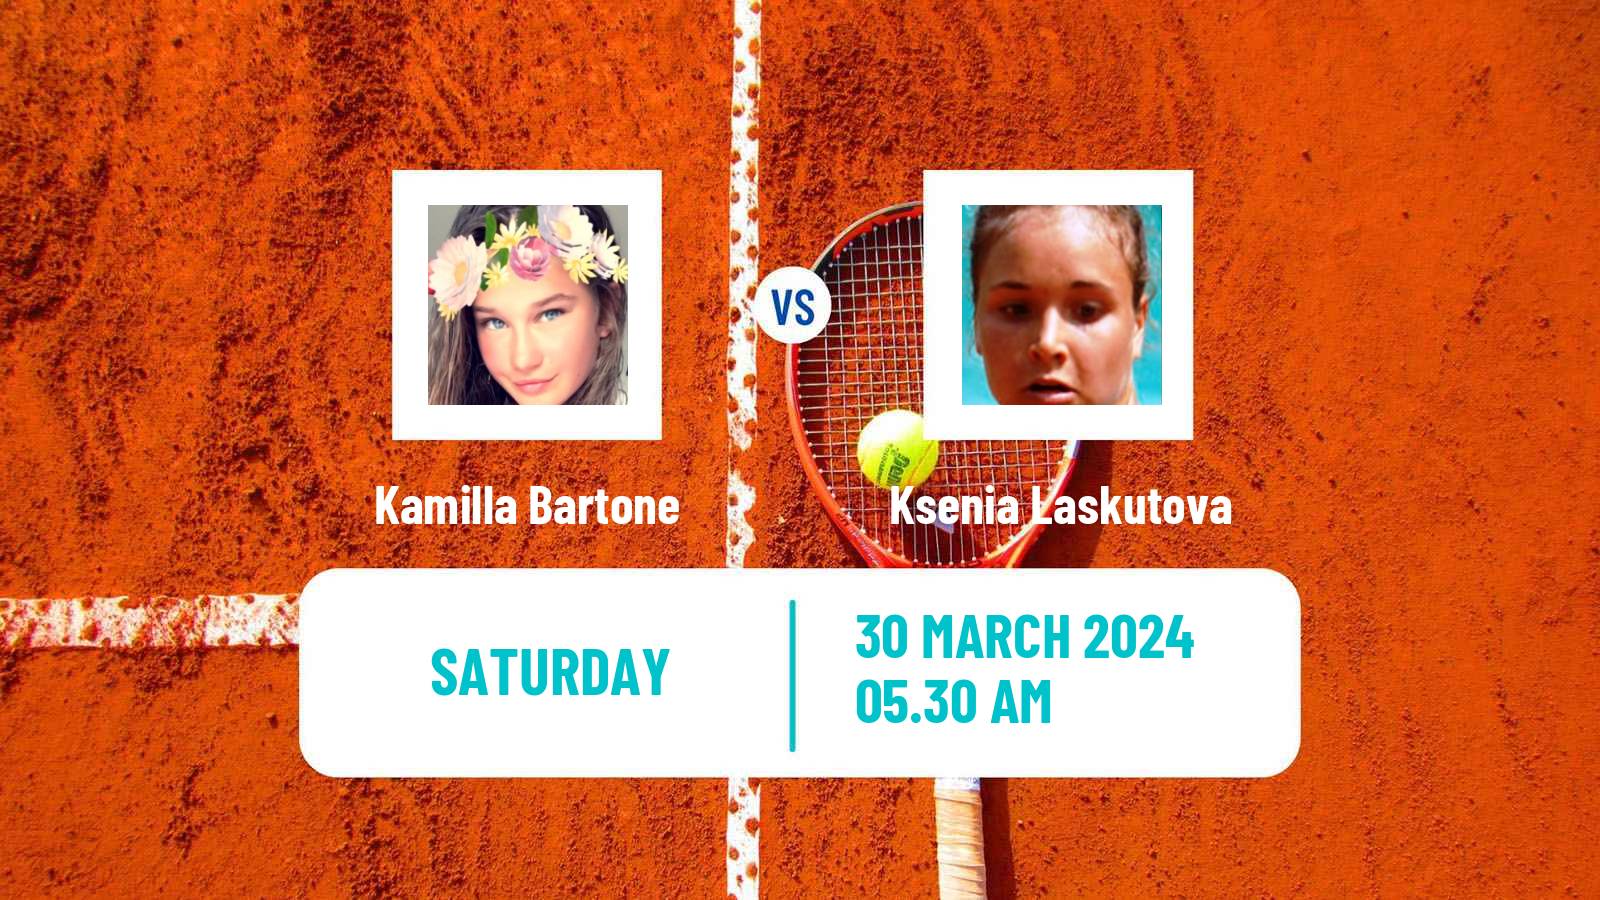 Tennis ITF W15 Antalya 7 Women Kamilla Bartone - Ksenia Laskutova